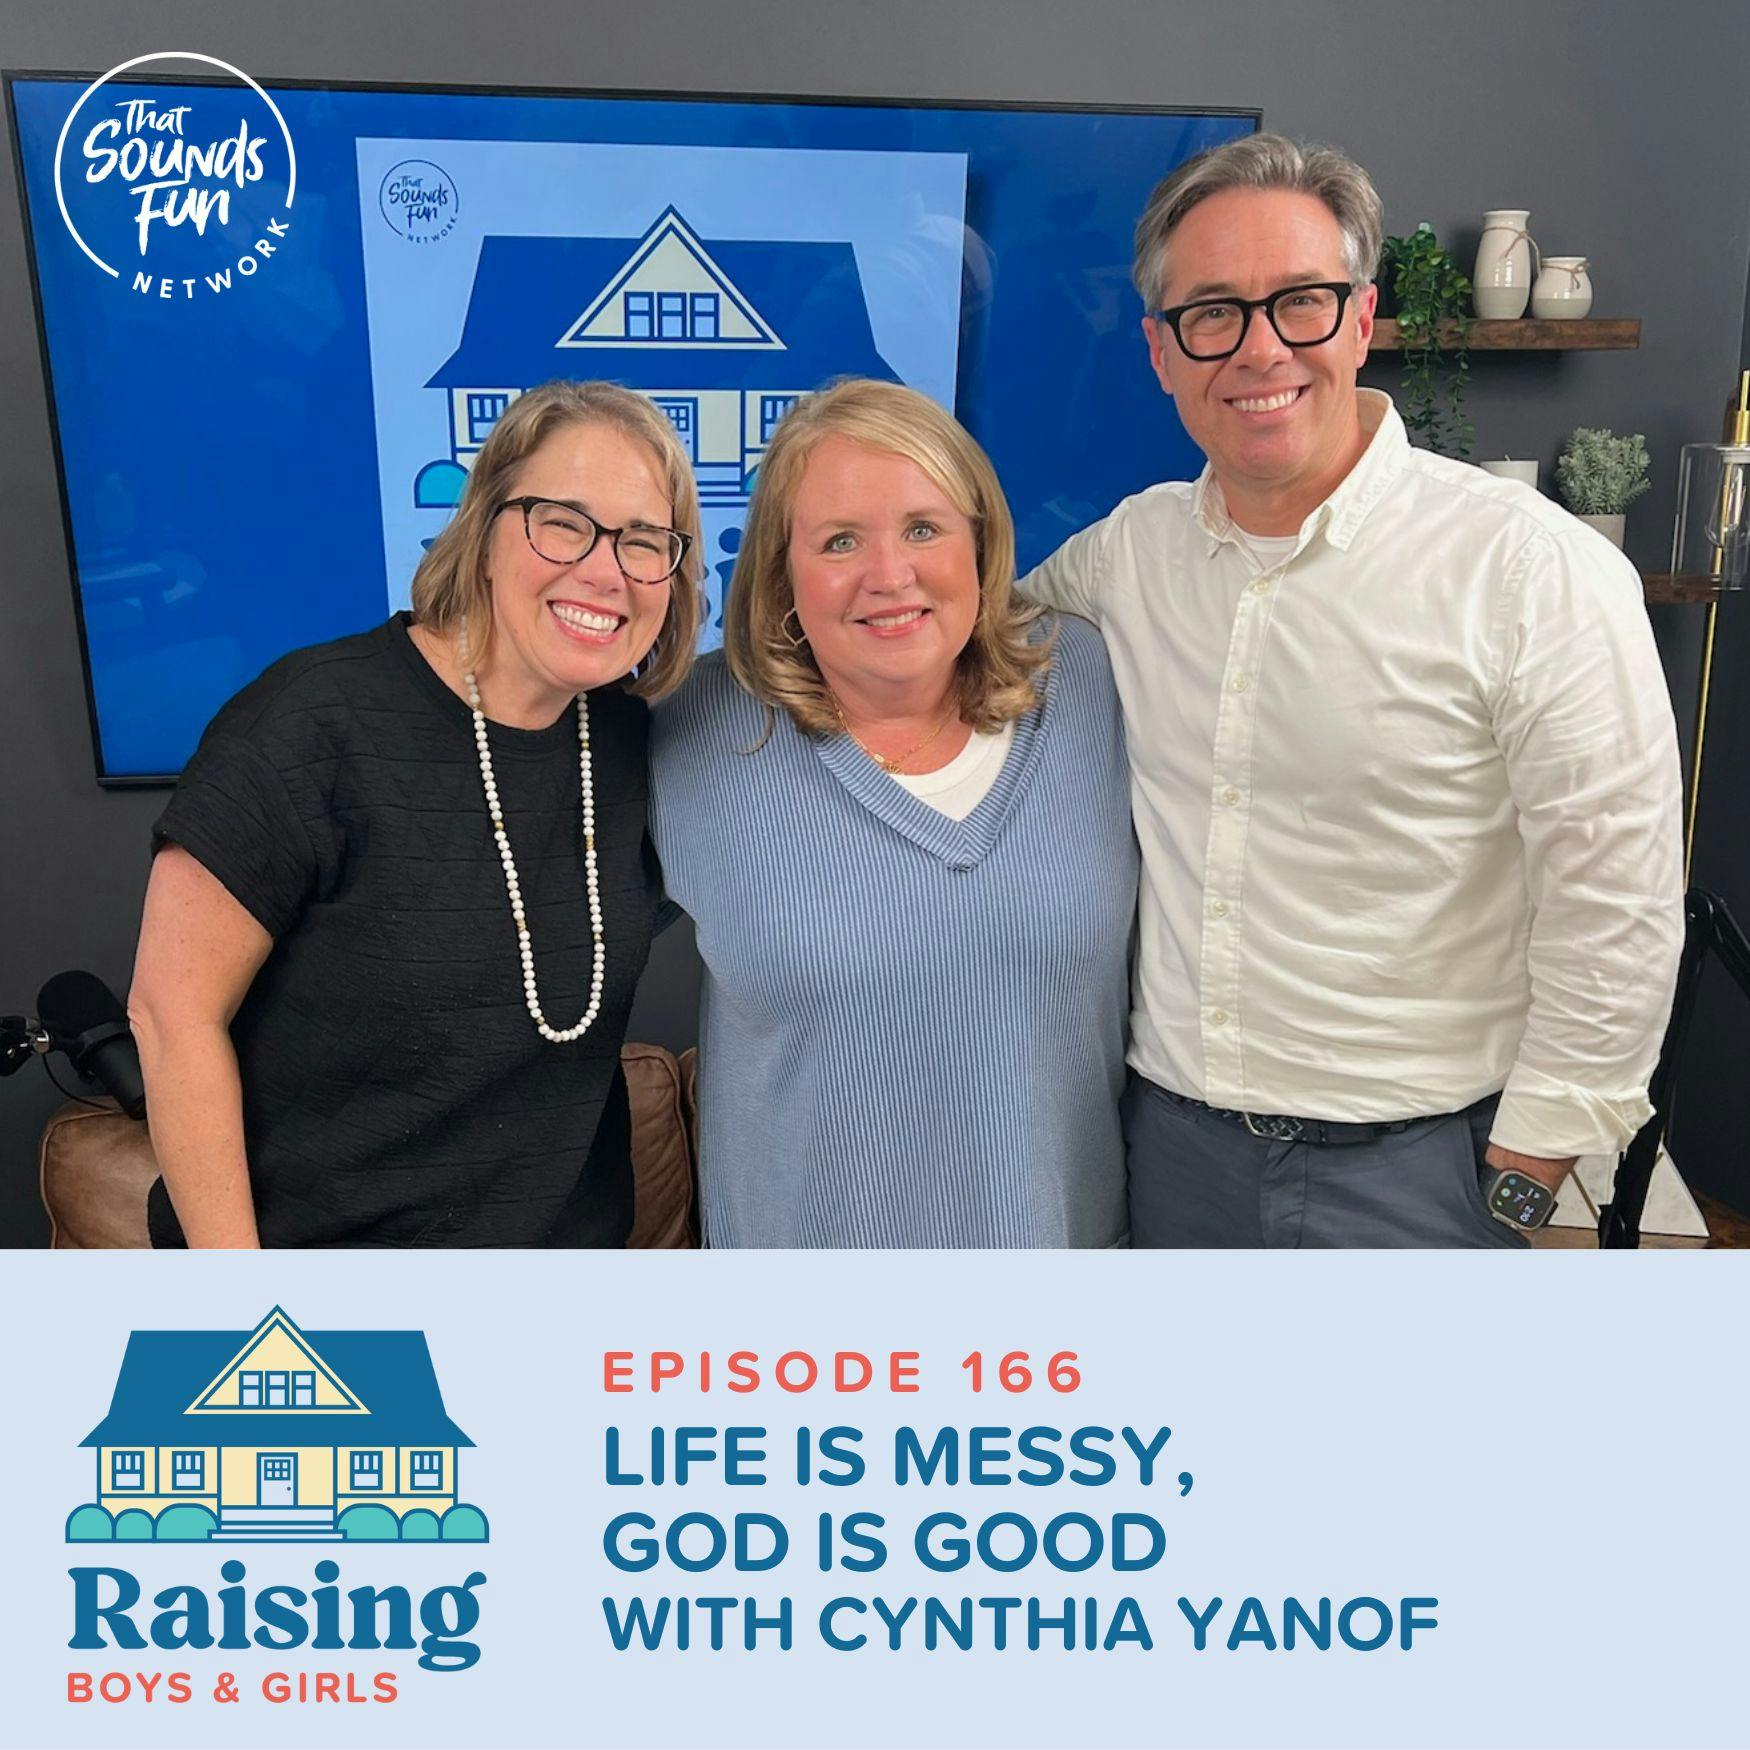 Episode 166: Life is Messy, God is Good with Cynthia Yanof